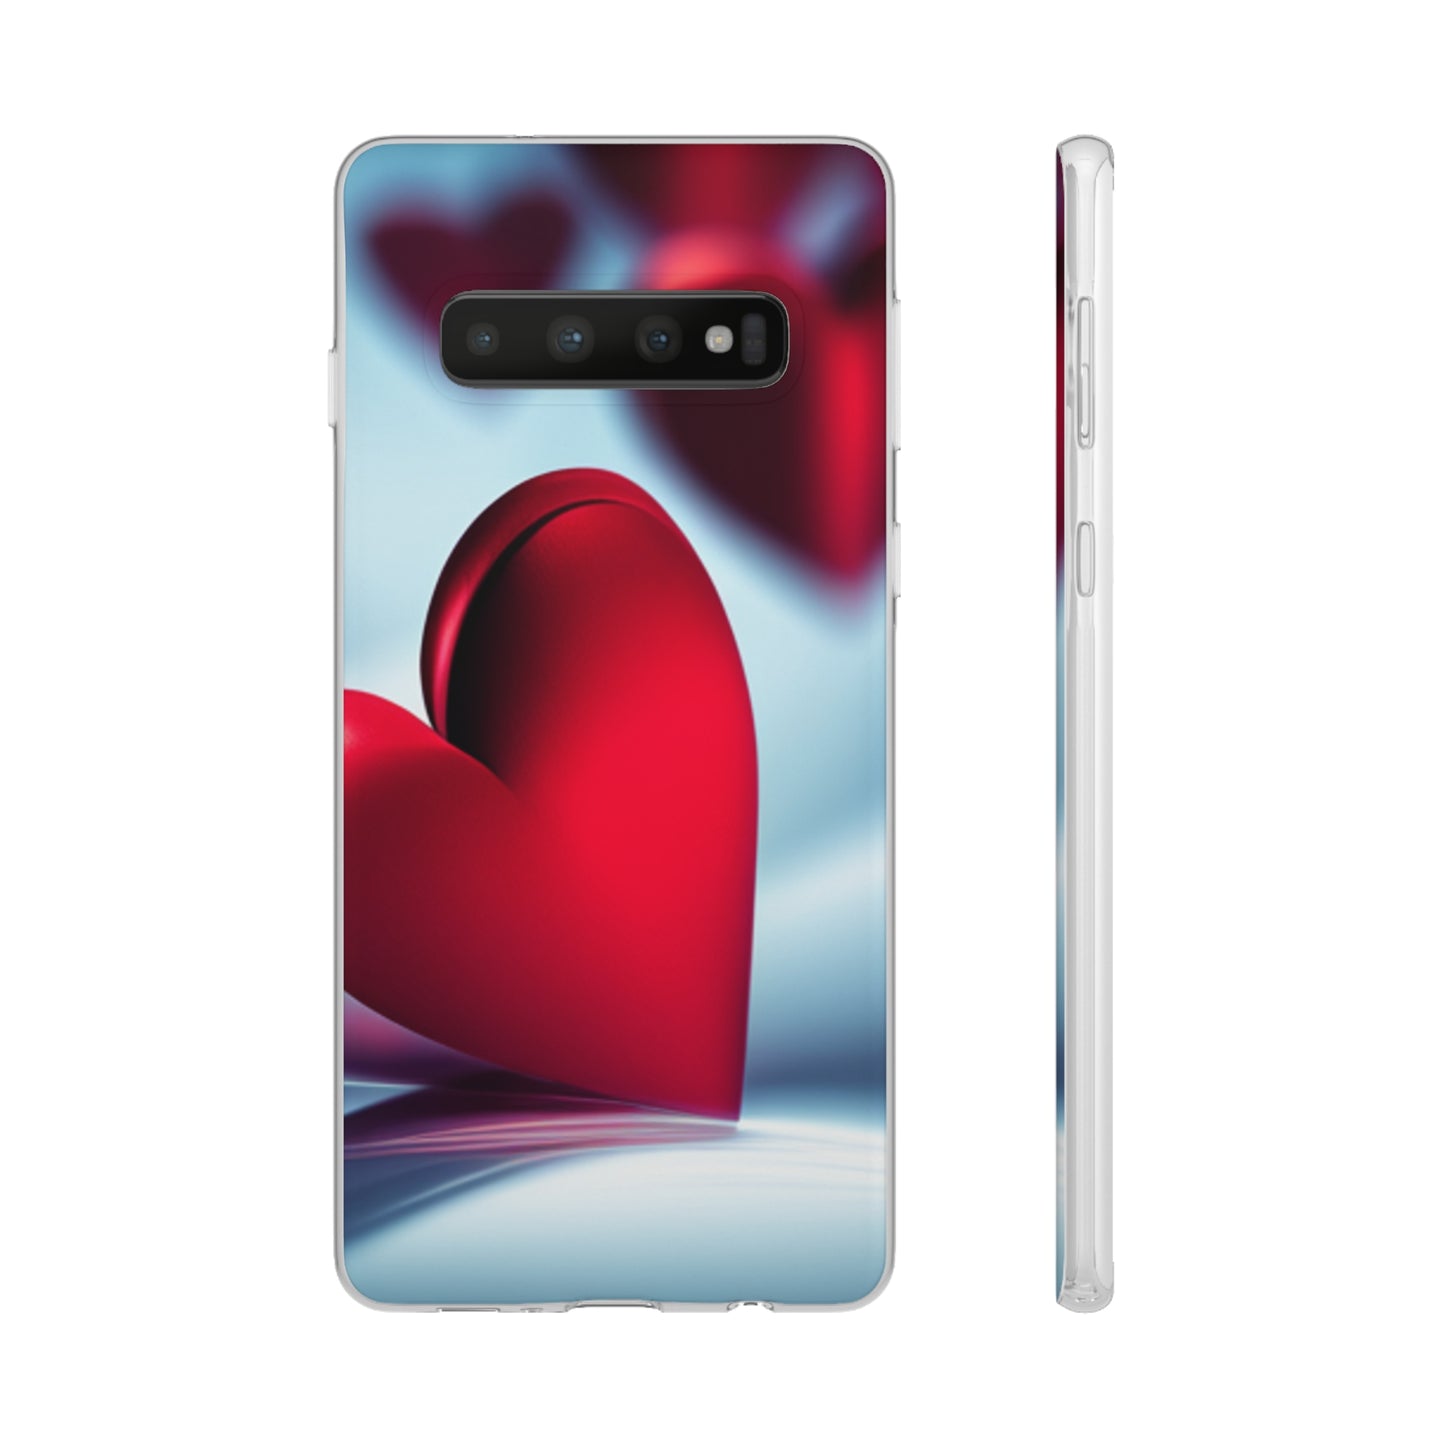 Red Heart Design Flexi Cases